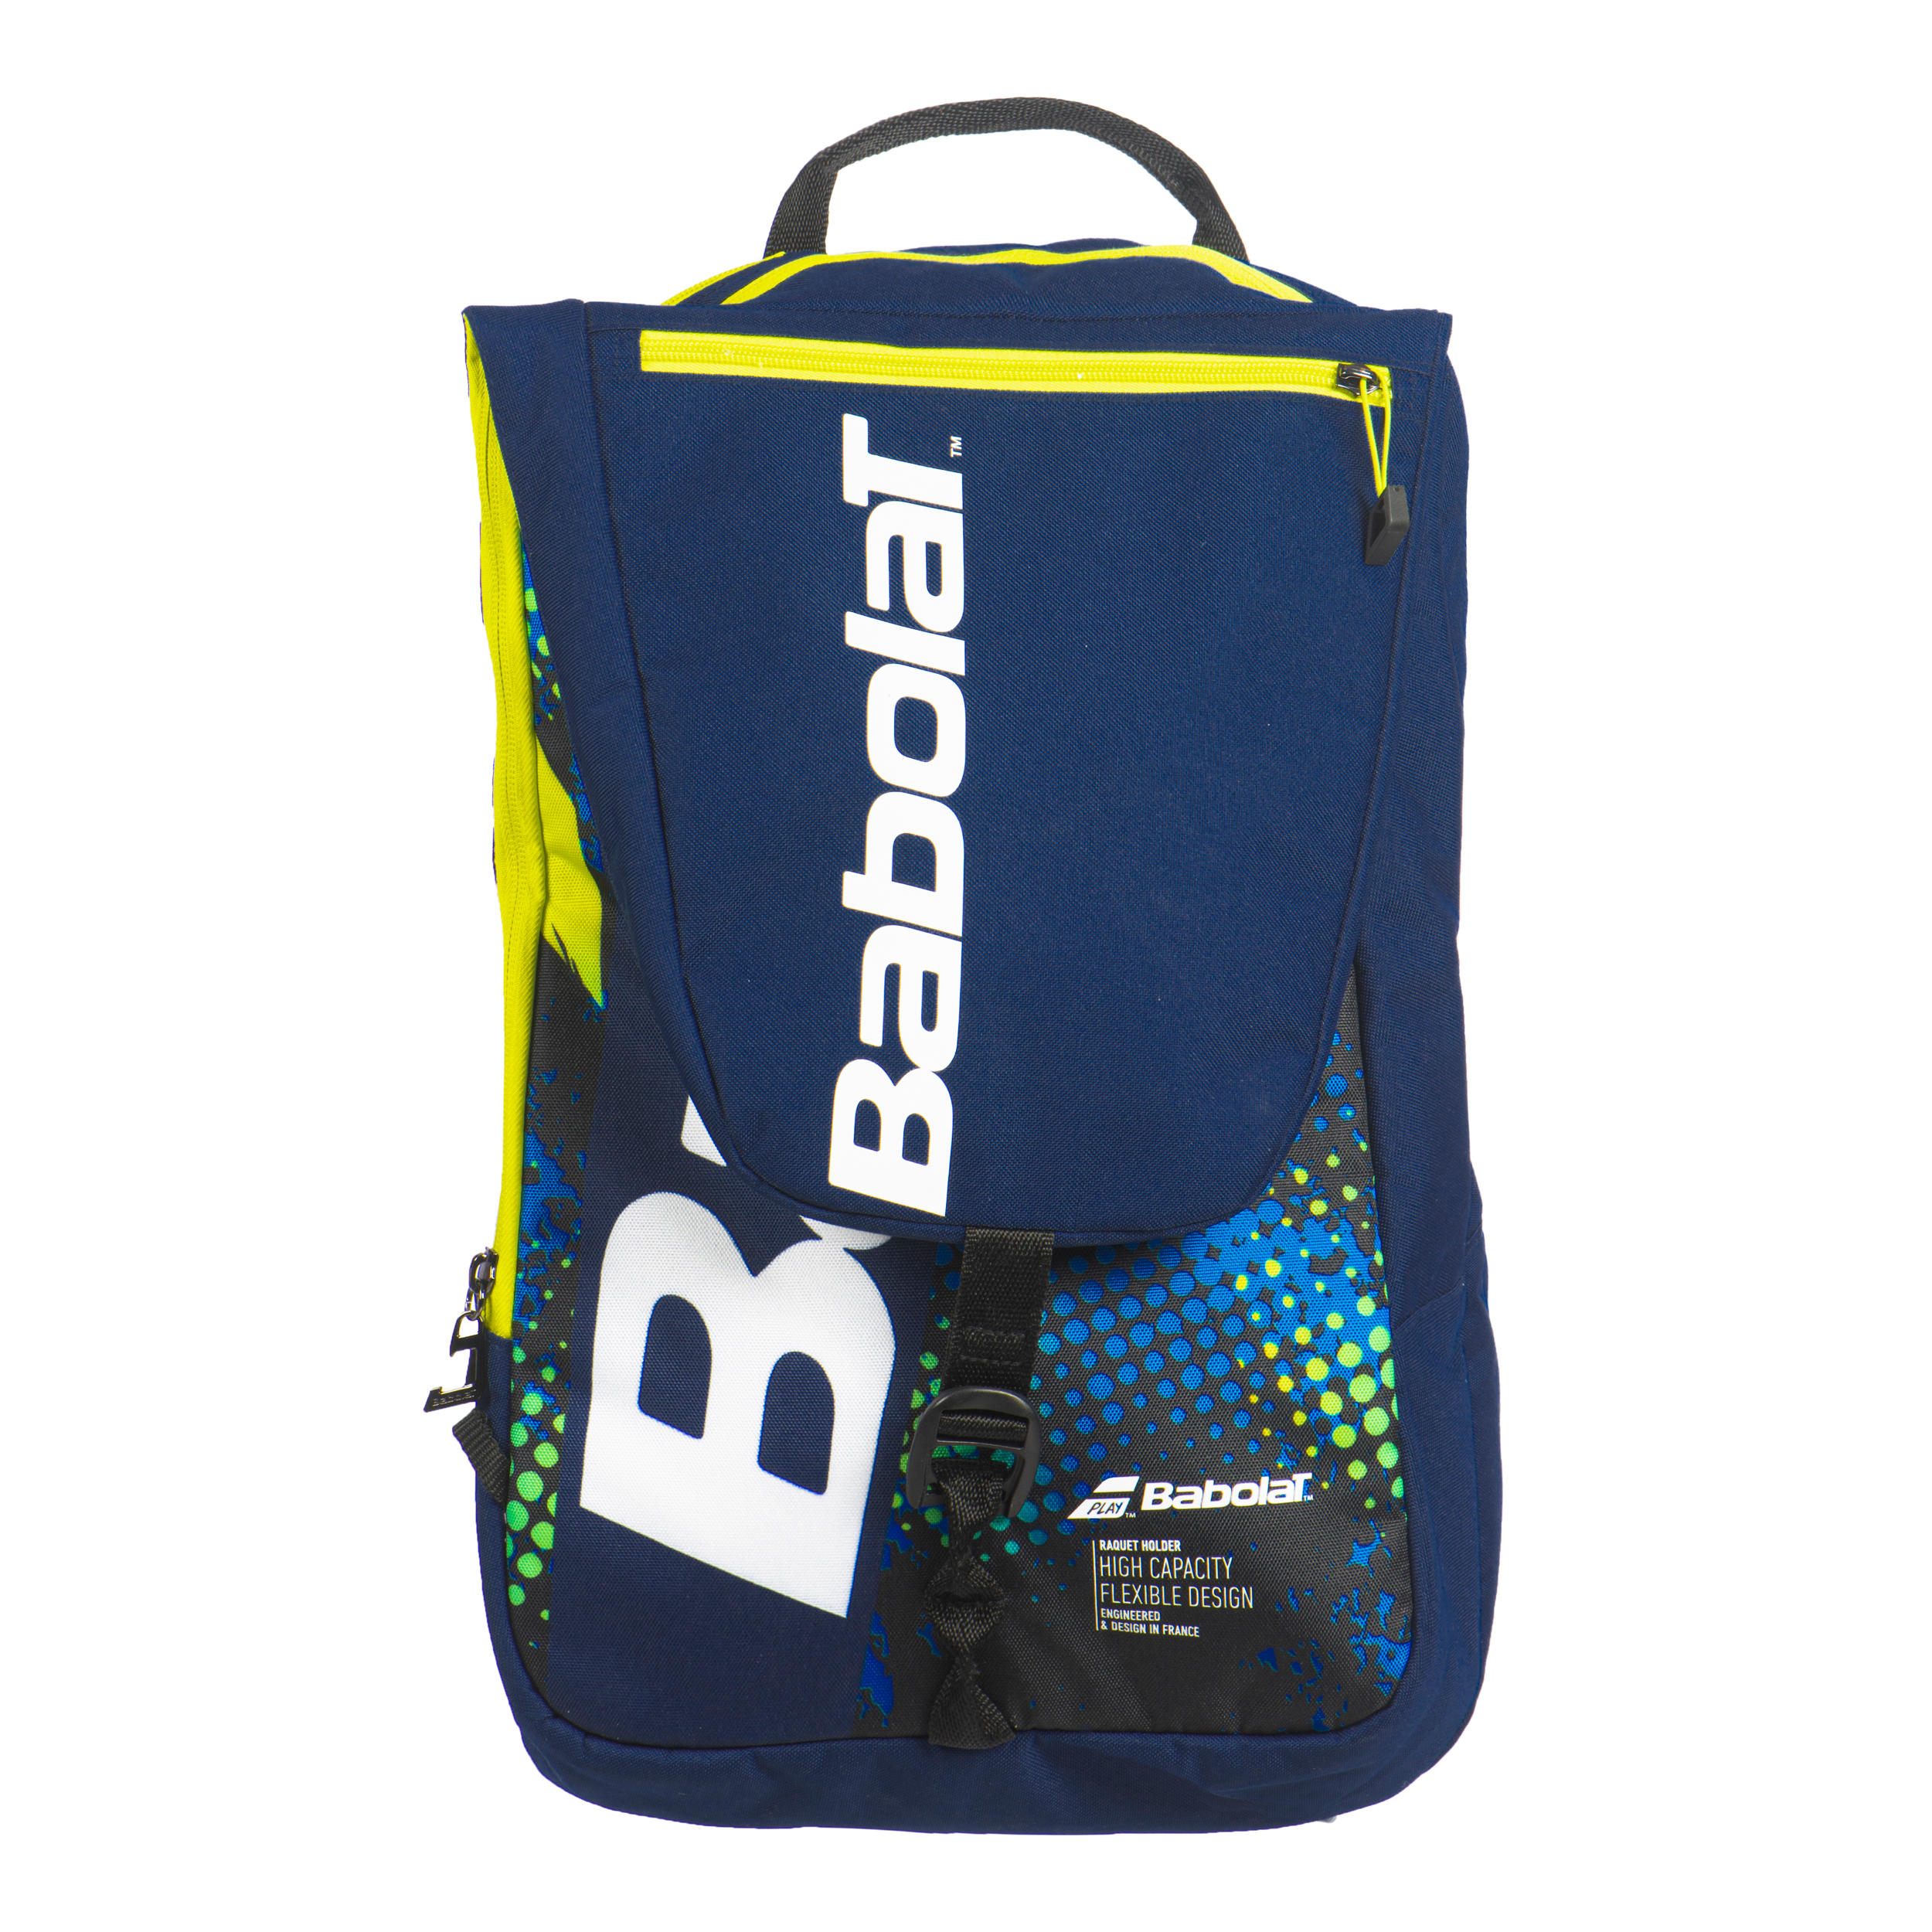 Ryggsäck För Racketsport (Badminton, Tennis, Squash) Babolat Tournament Bag